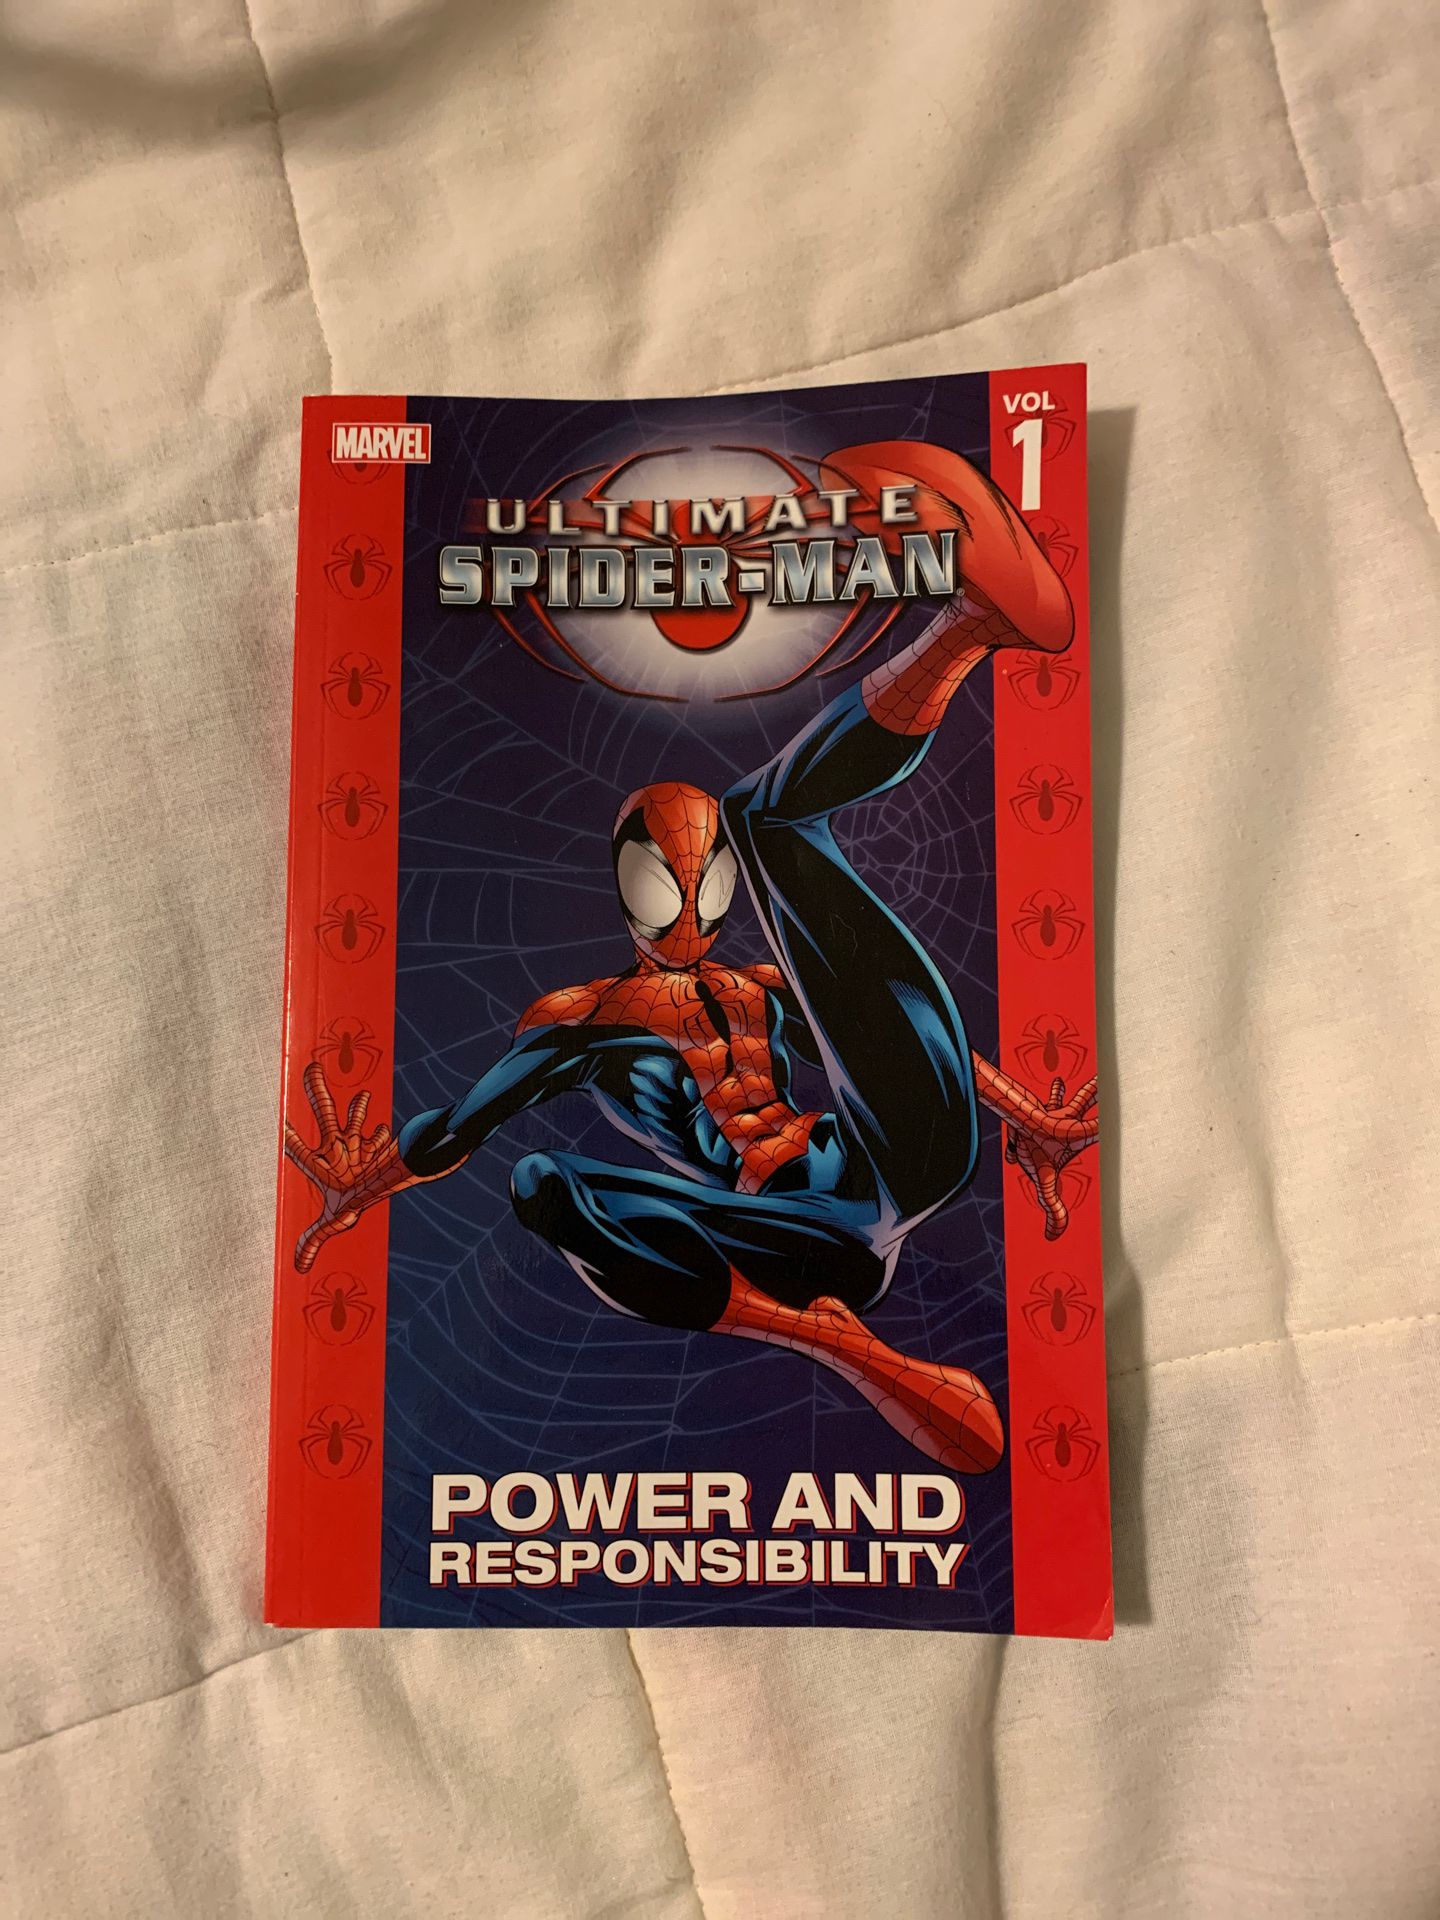 Spider-Man comic book